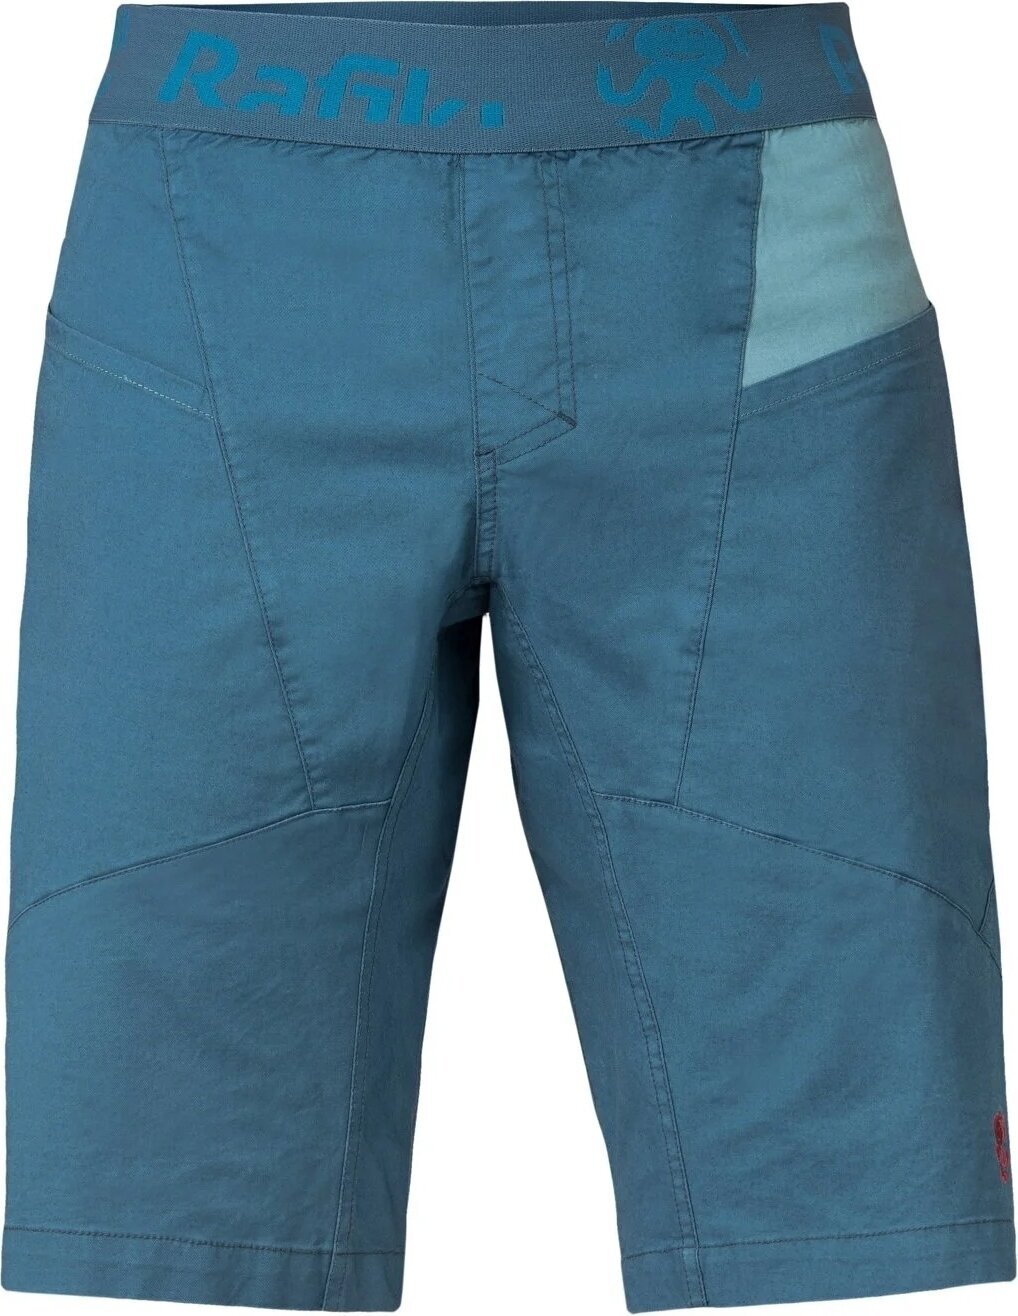 Outdoor Shorts Rafiki Megos Man Shorts Stargazer/Atlantic XL Outdoor Shorts